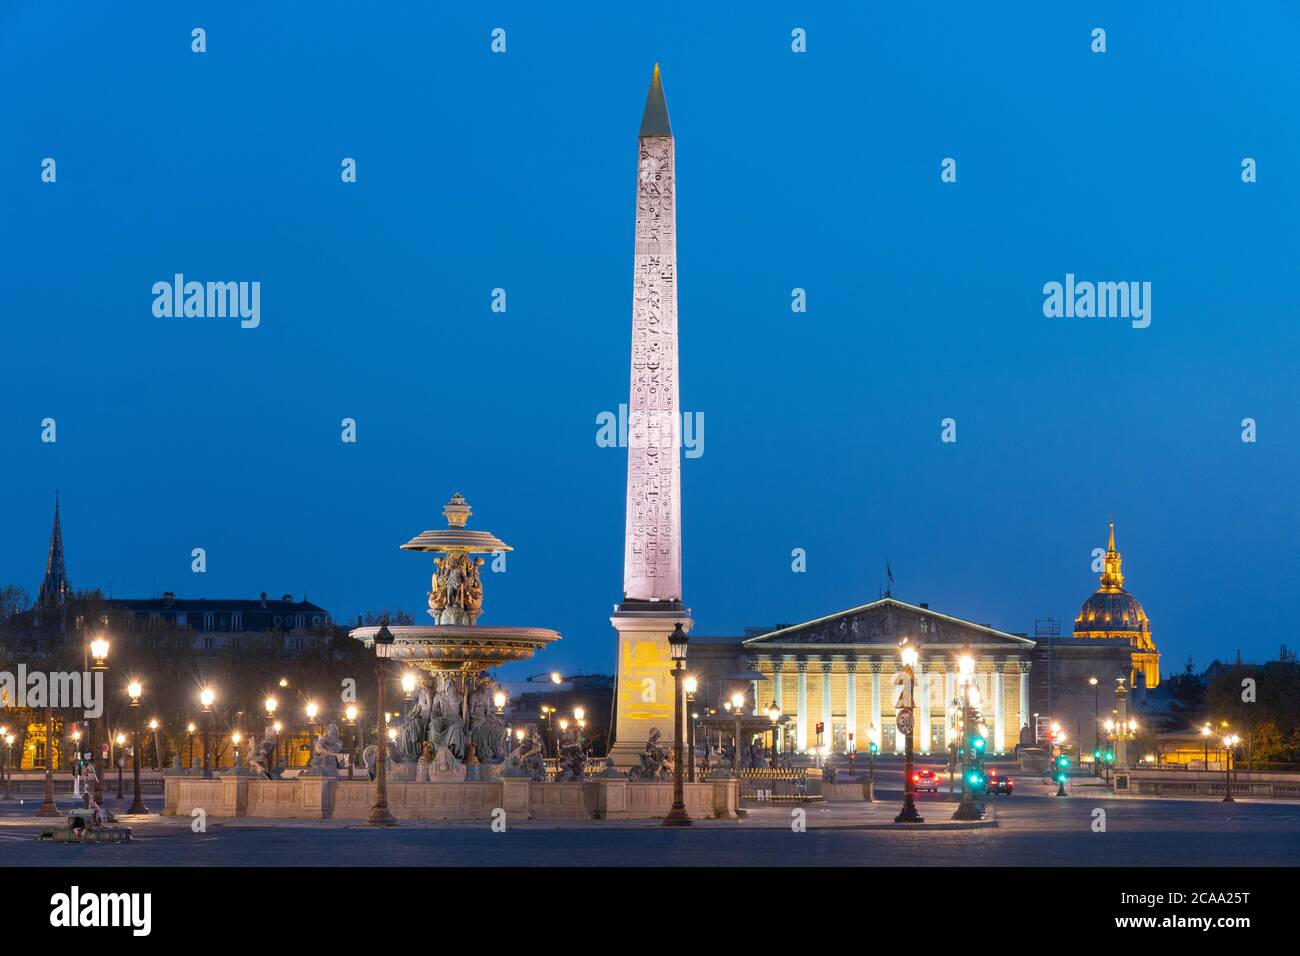 Place de la Concorde of Concorde Square is one of the major public squares in Paris, France Stock Photo